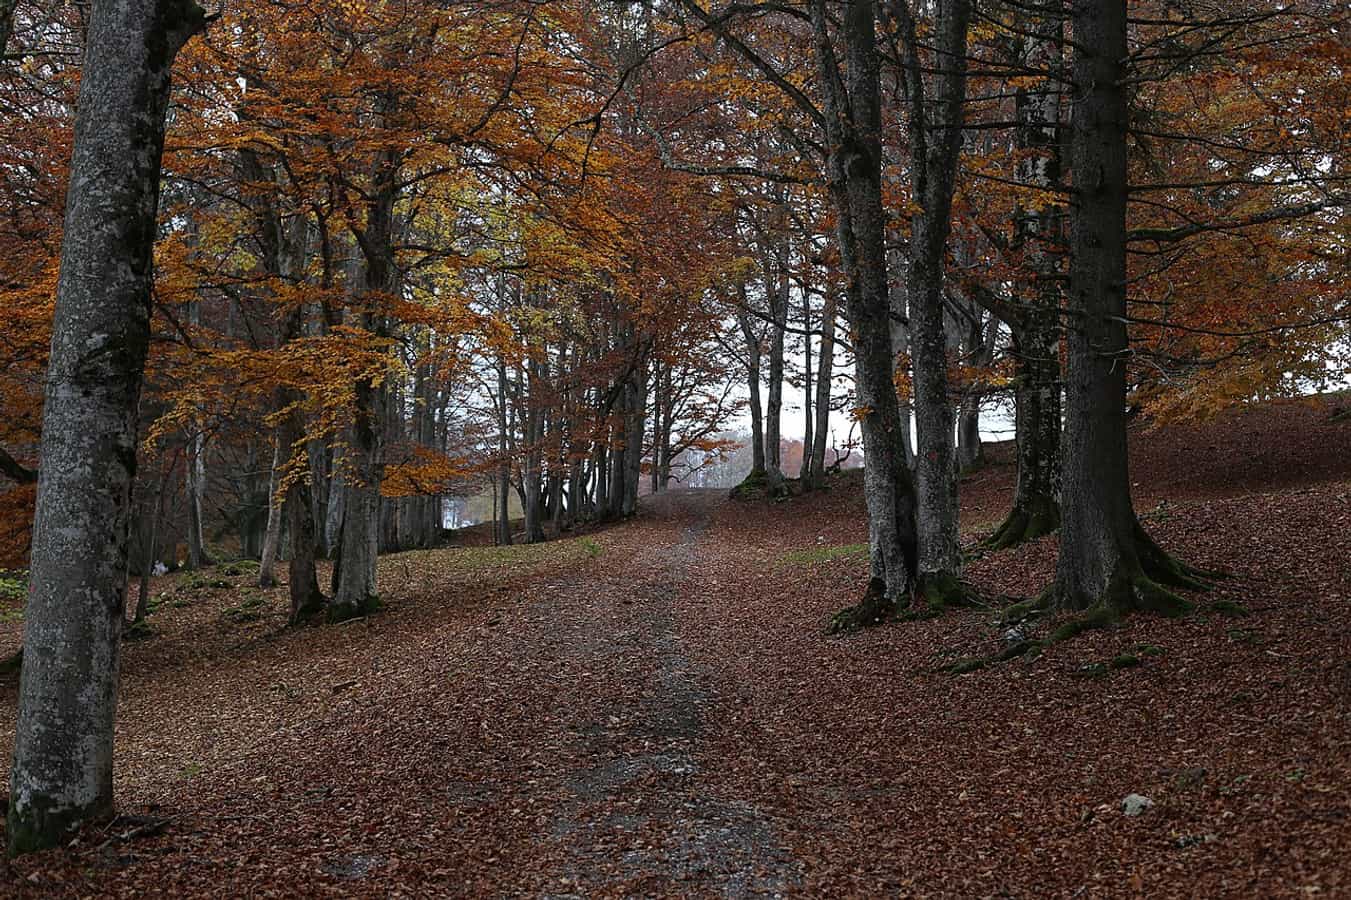 Forest near La Tourne Dessus, Brot-Plamboz municipality in the canton of Neuchâtel